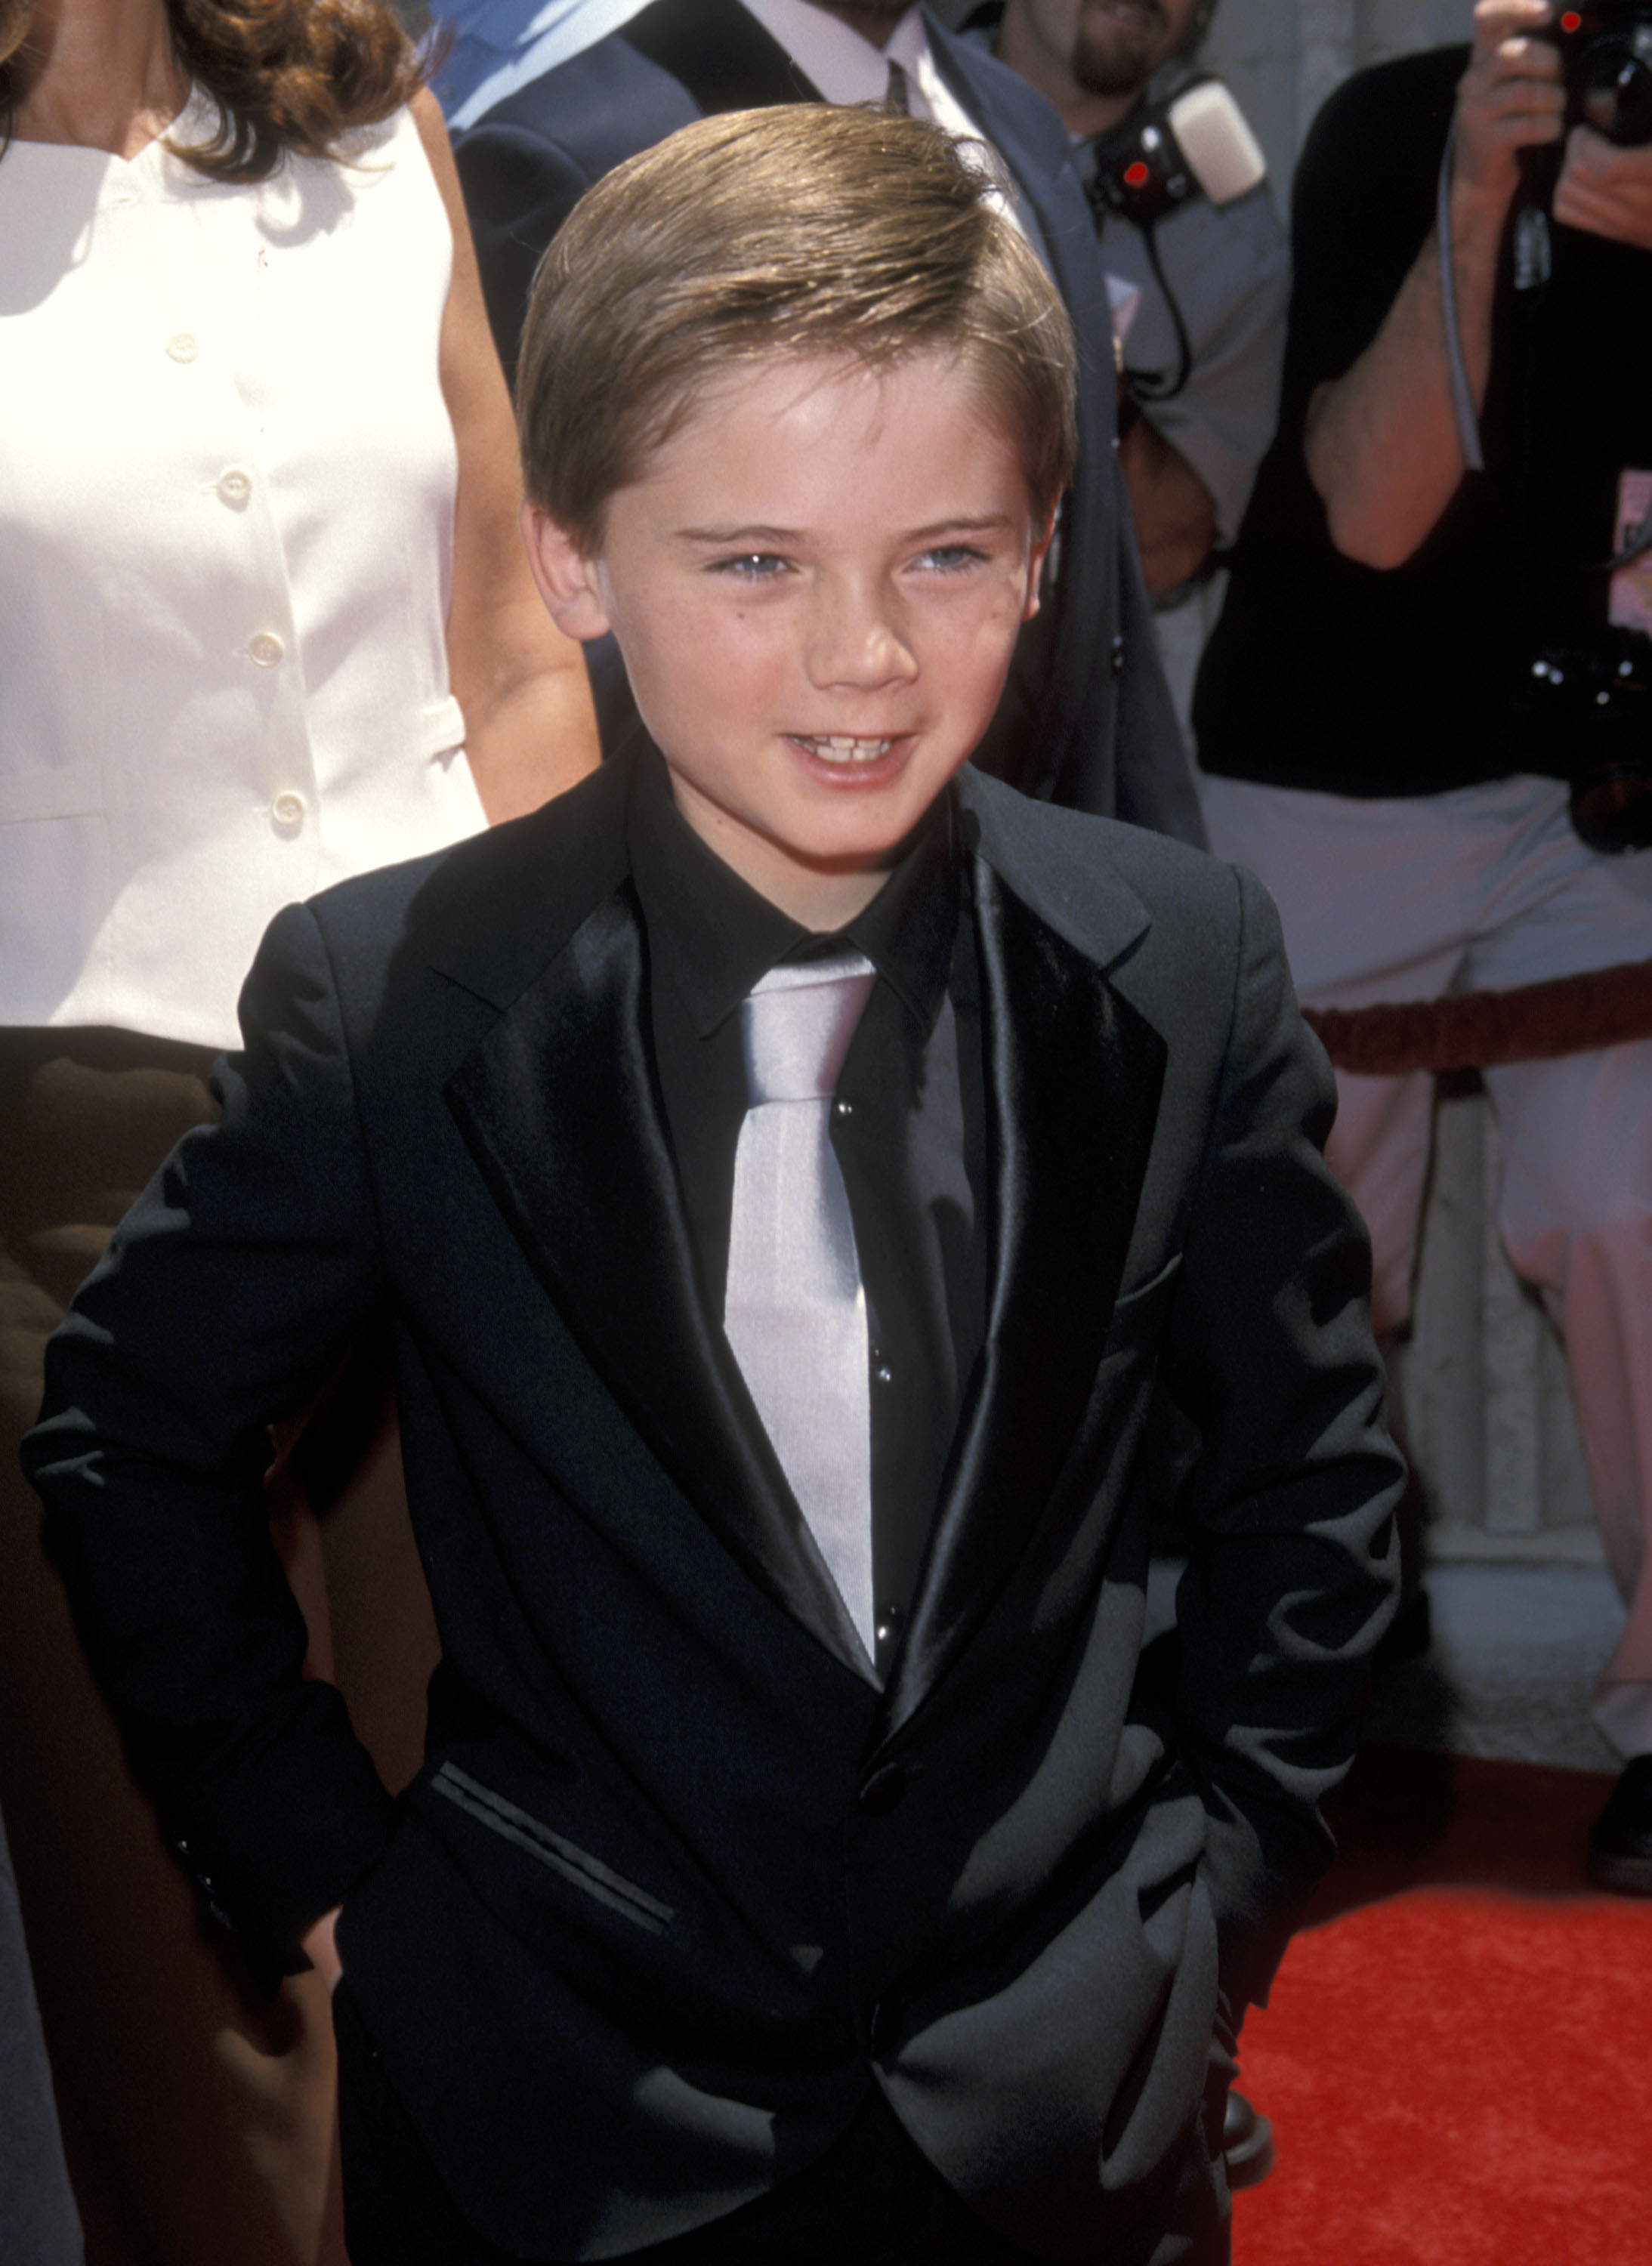 Jake Lloyd am 16. Mai 1999 in Westwood, Kalifornien. | Quelle: Getty Images